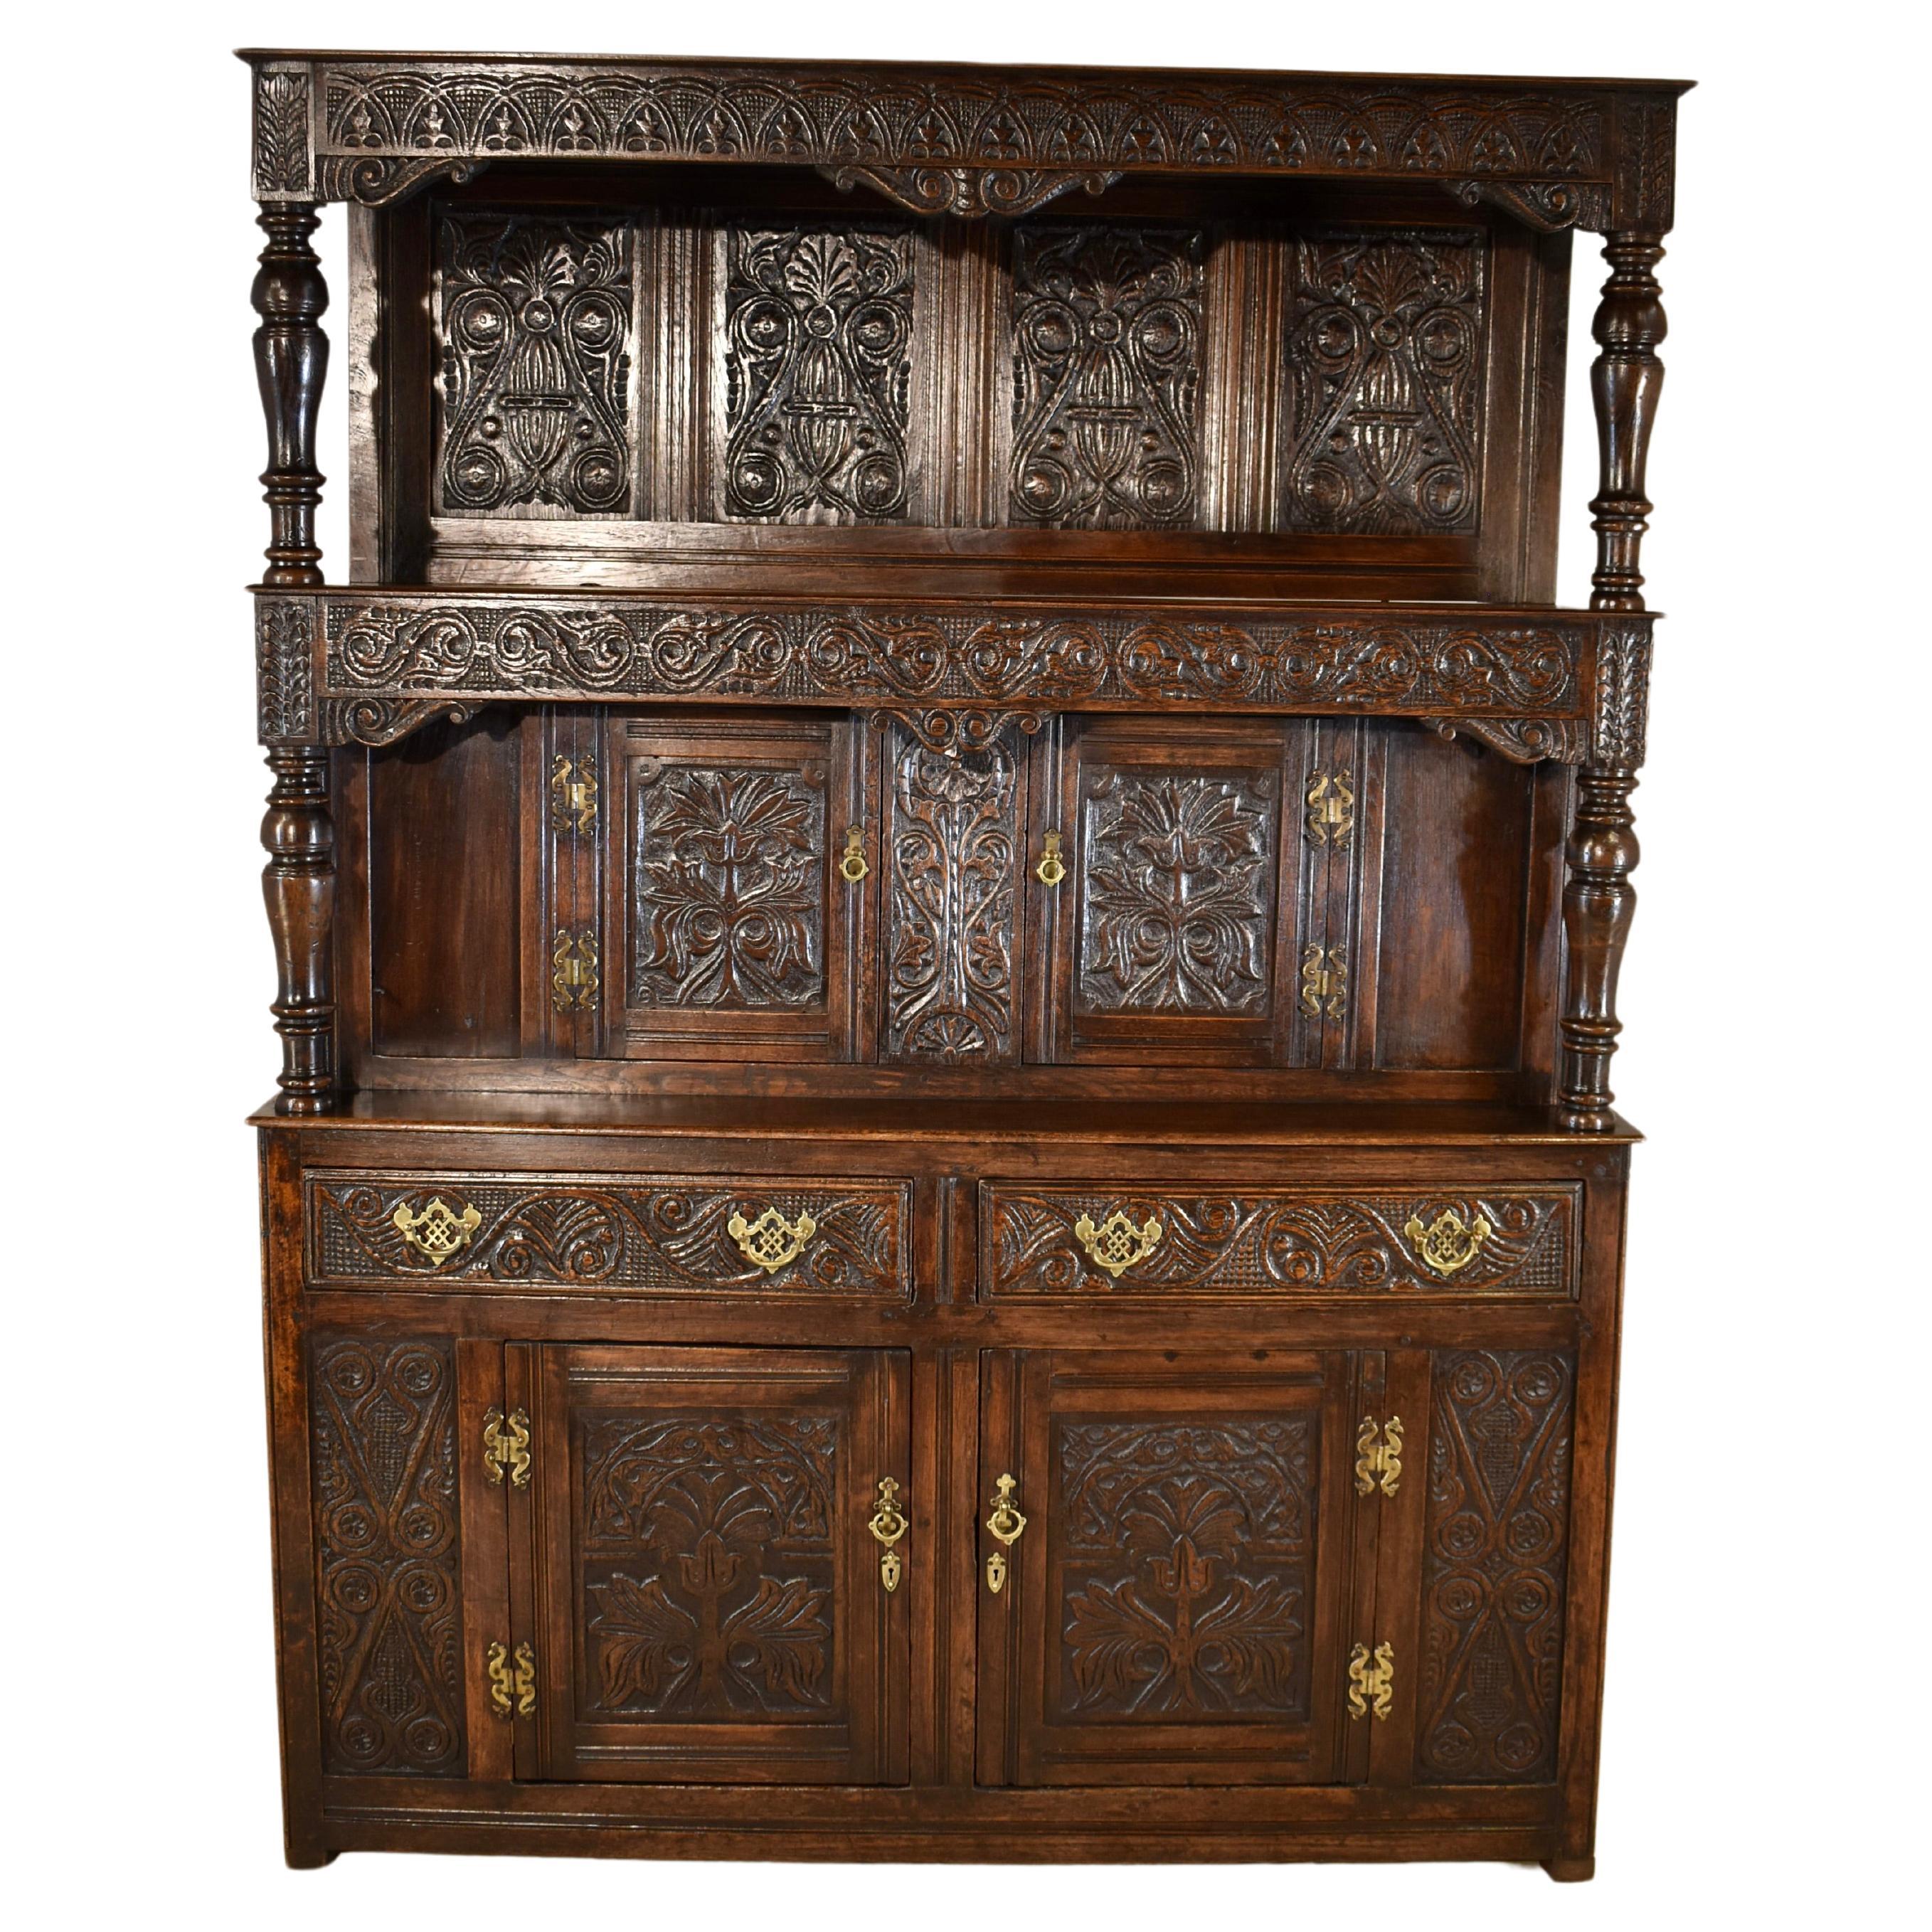 Early 18th Century English Tridarn Press Cupboard